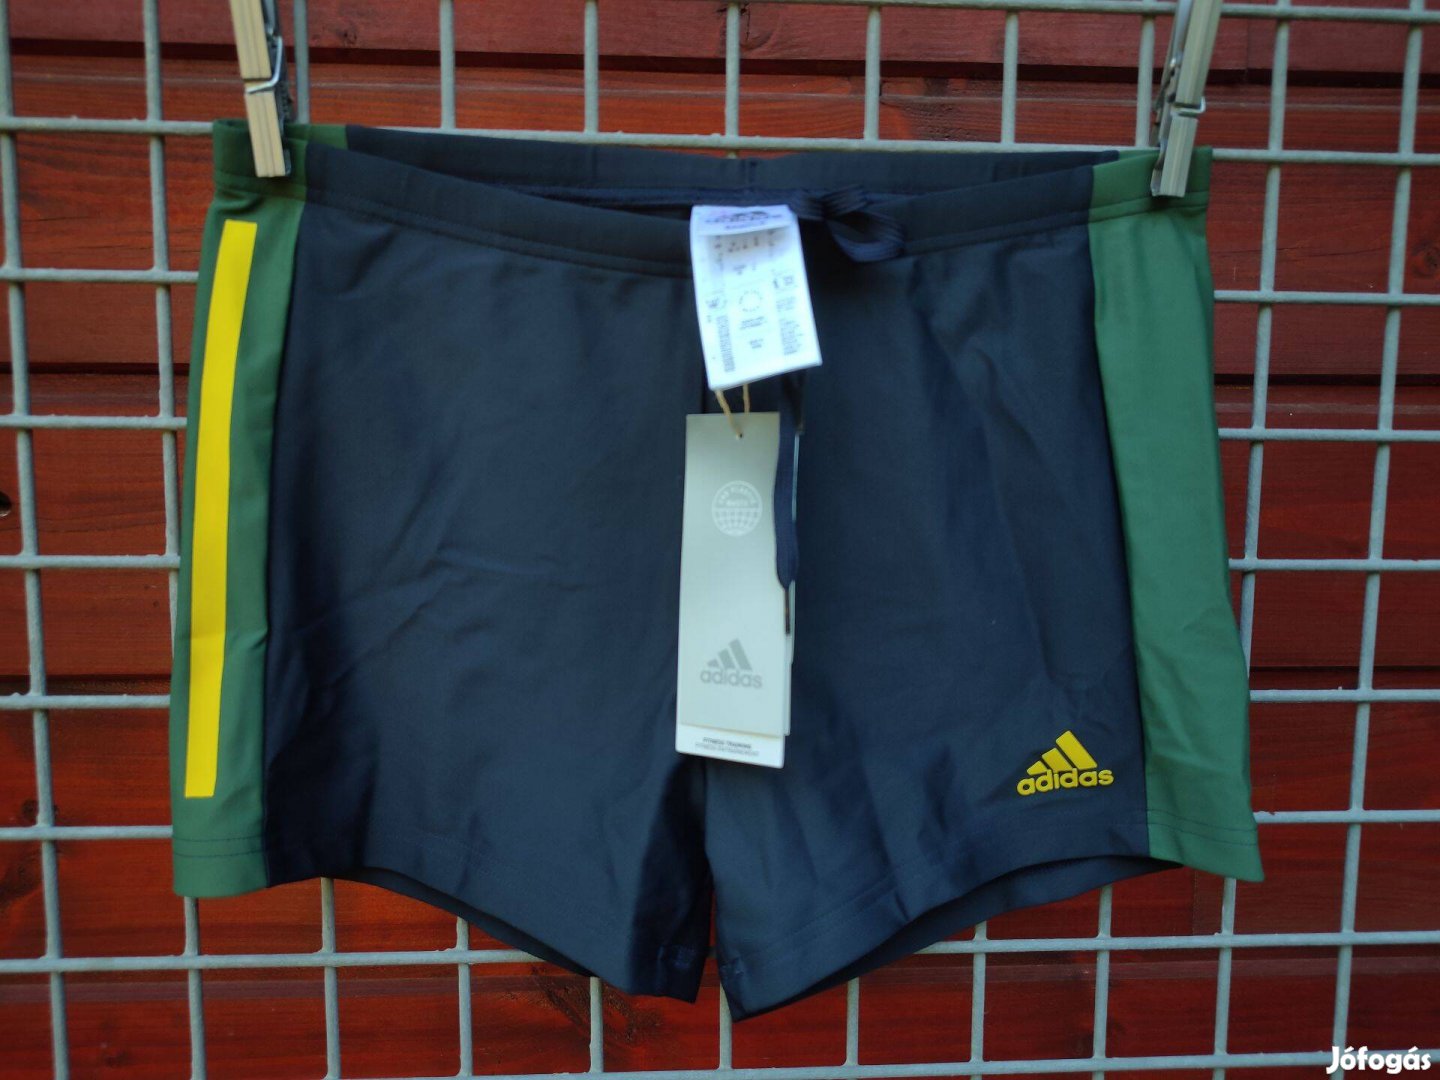 Adidas fekete zöld sárga boxer fürdőnadrág M-es (06.)